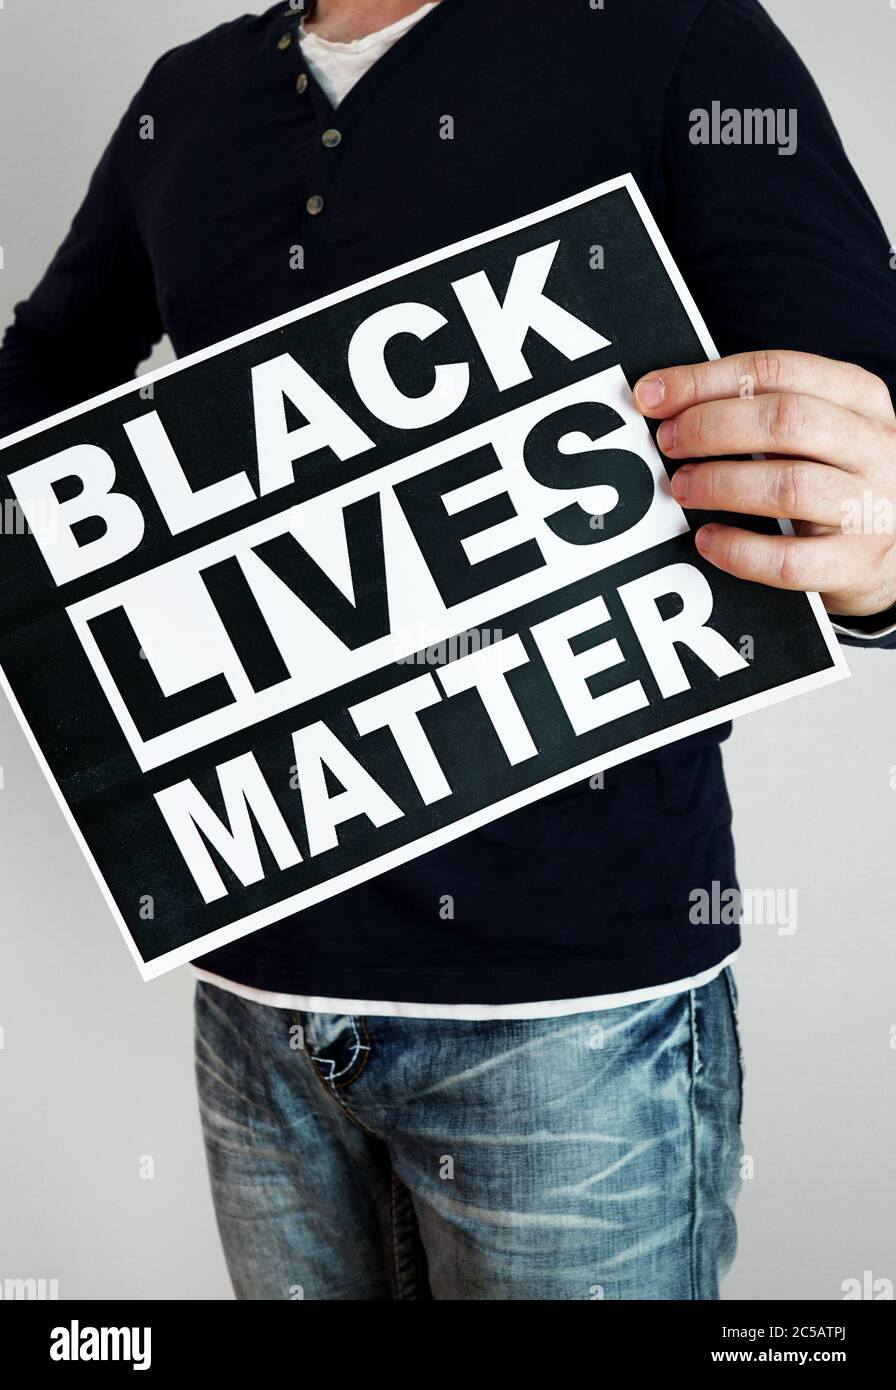 Man holding 'Black lives matter' sign. Stock Photo